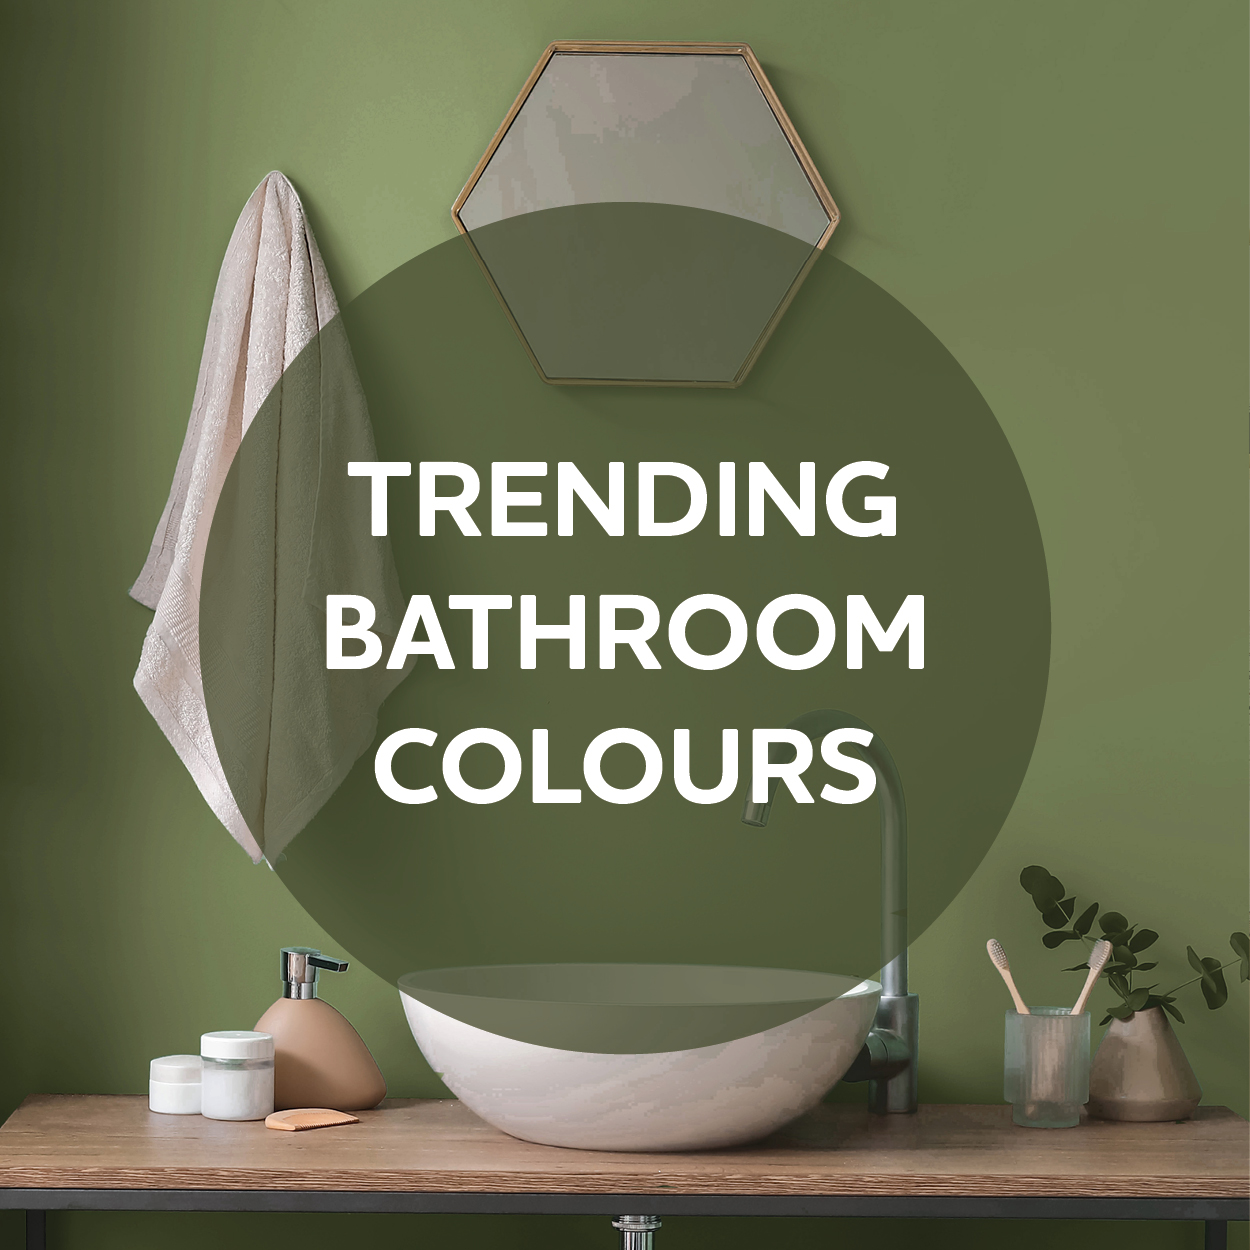 Trending bathroom colours